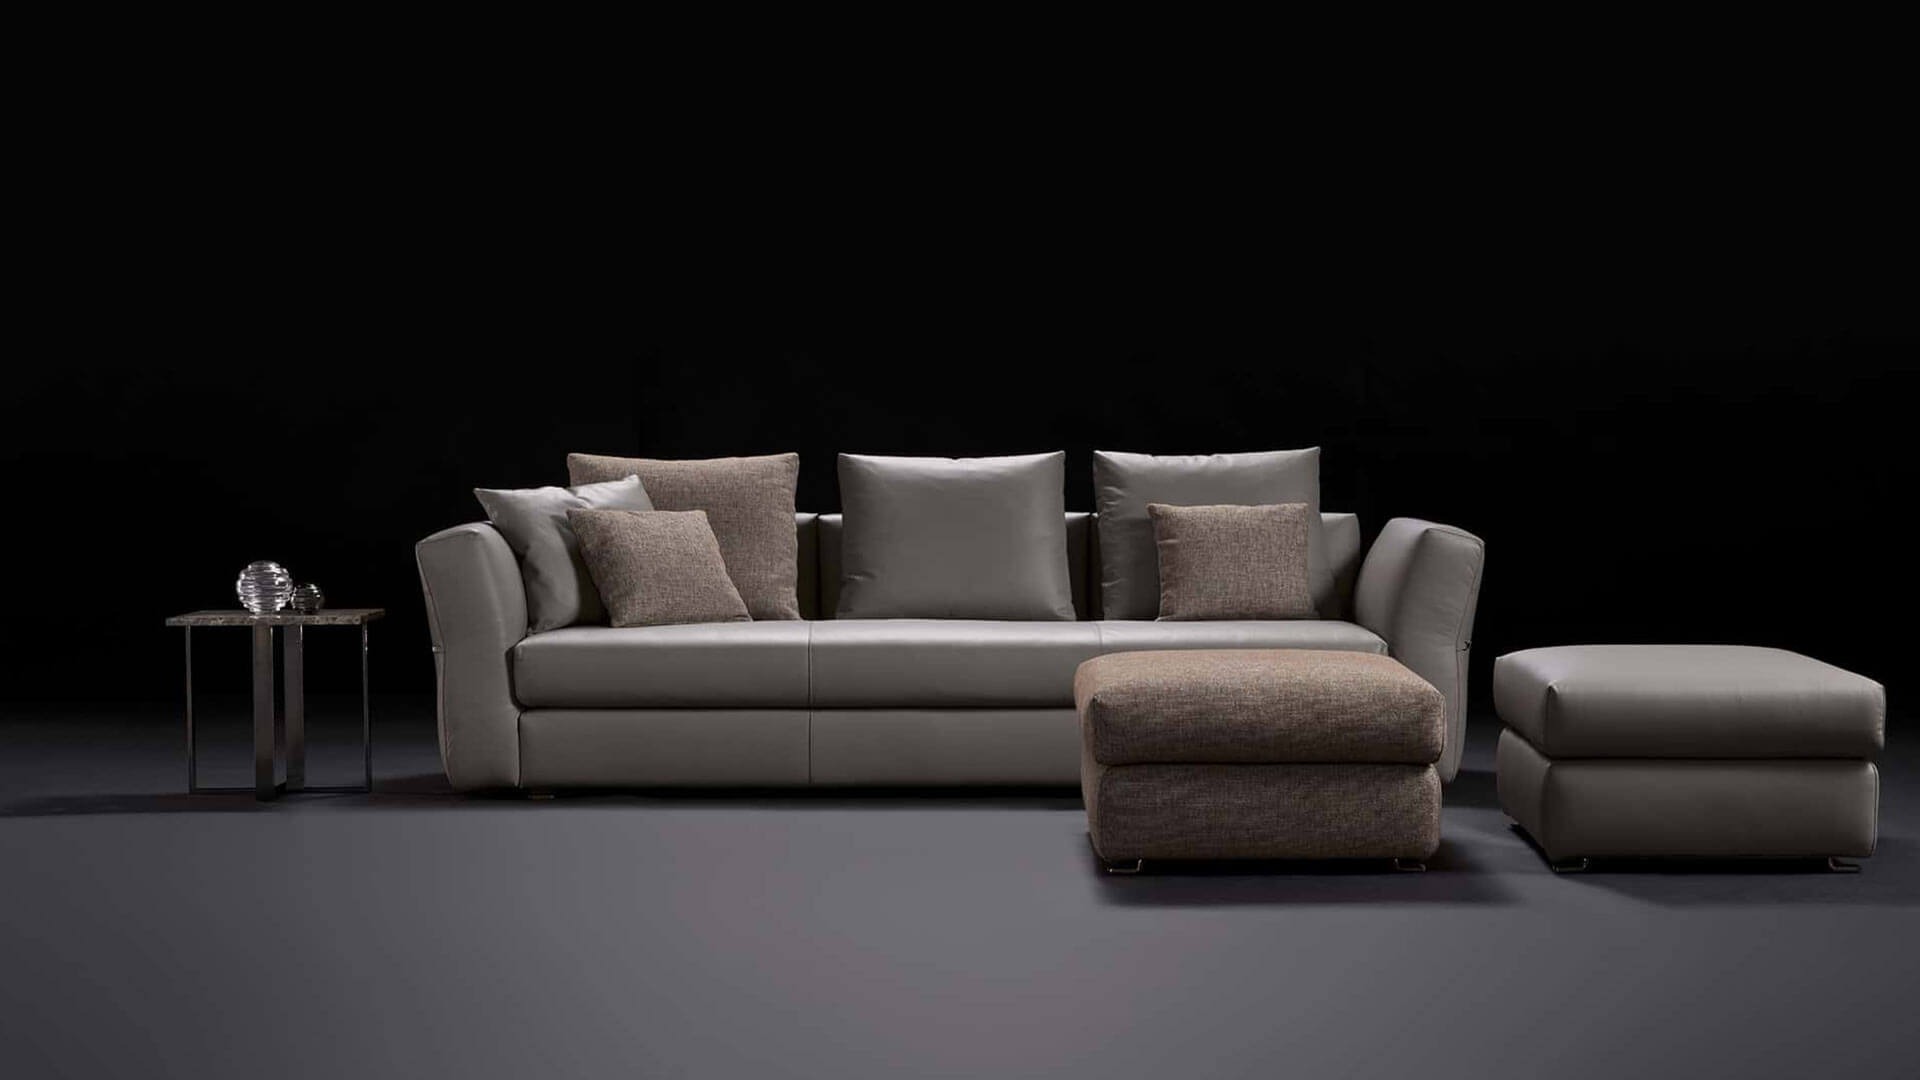 Blog IDW - Why choose a Rosini leather sofa